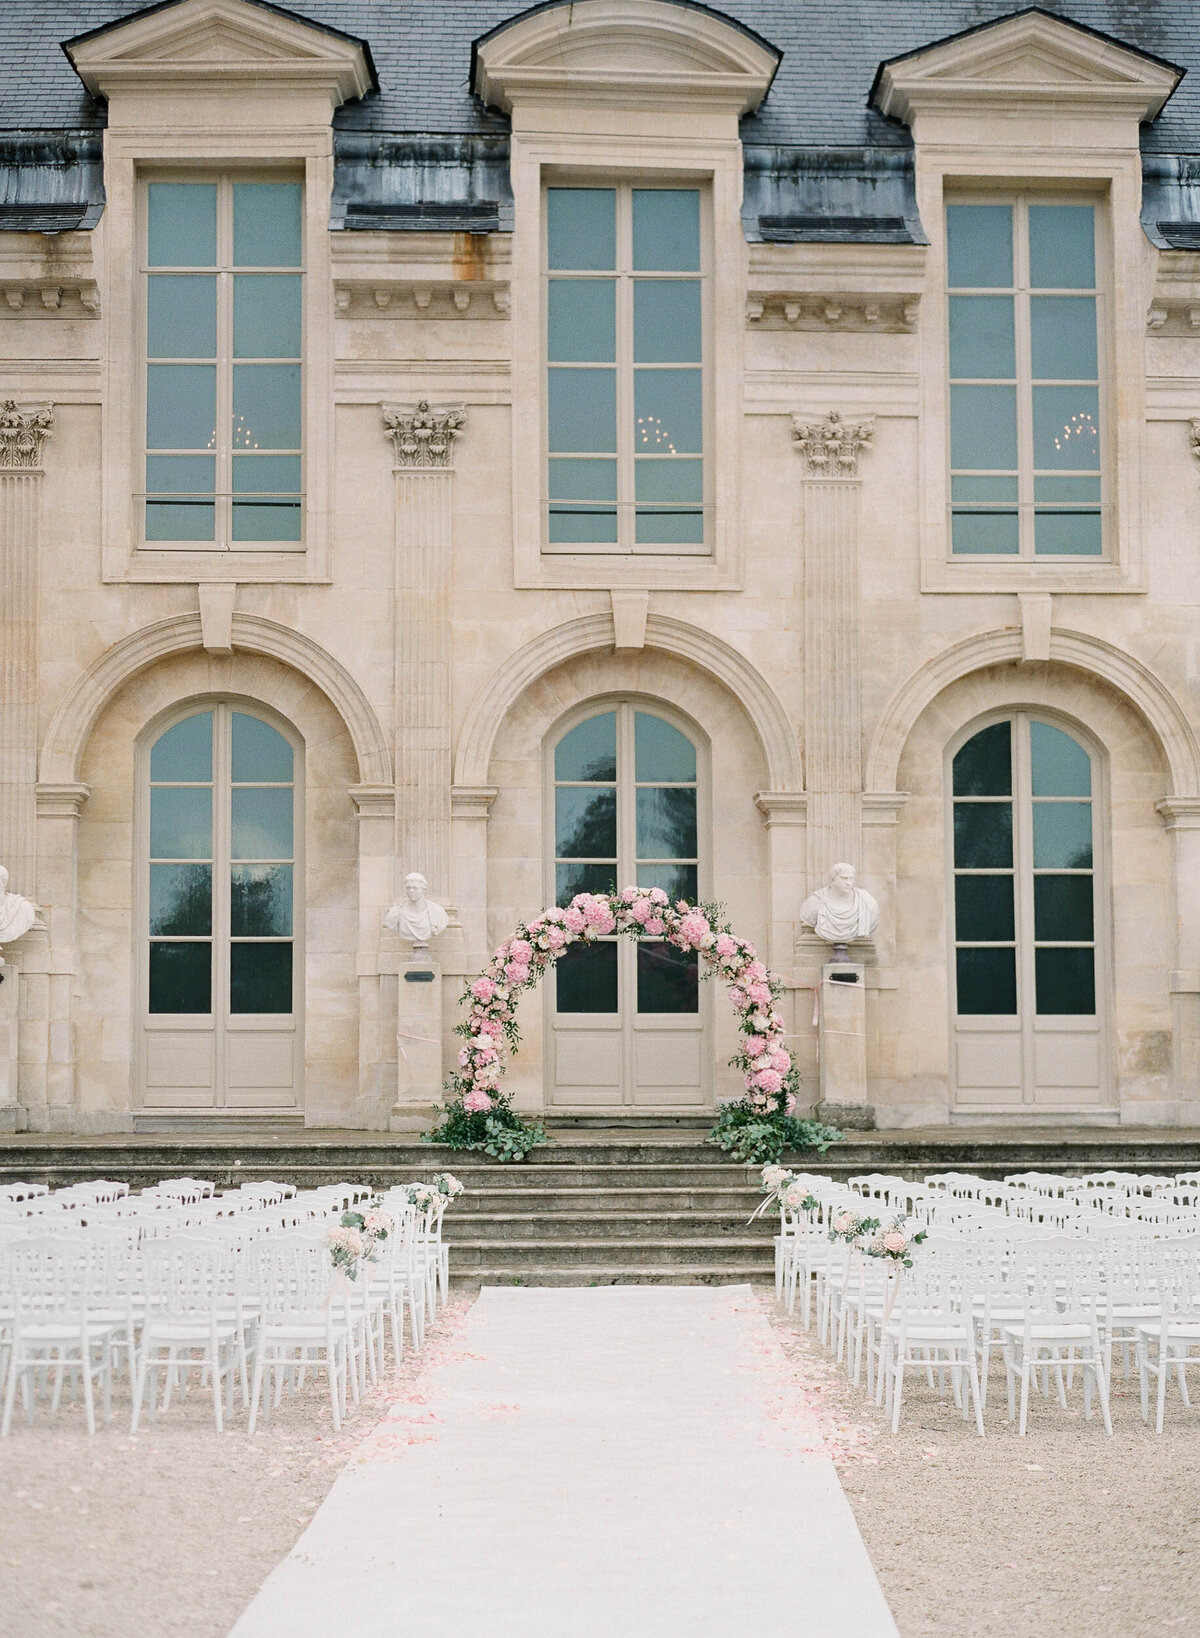 24-Chateau-de-Chantilly-wedding-ceremony-setting-Alexandra-Vonk-photography-24